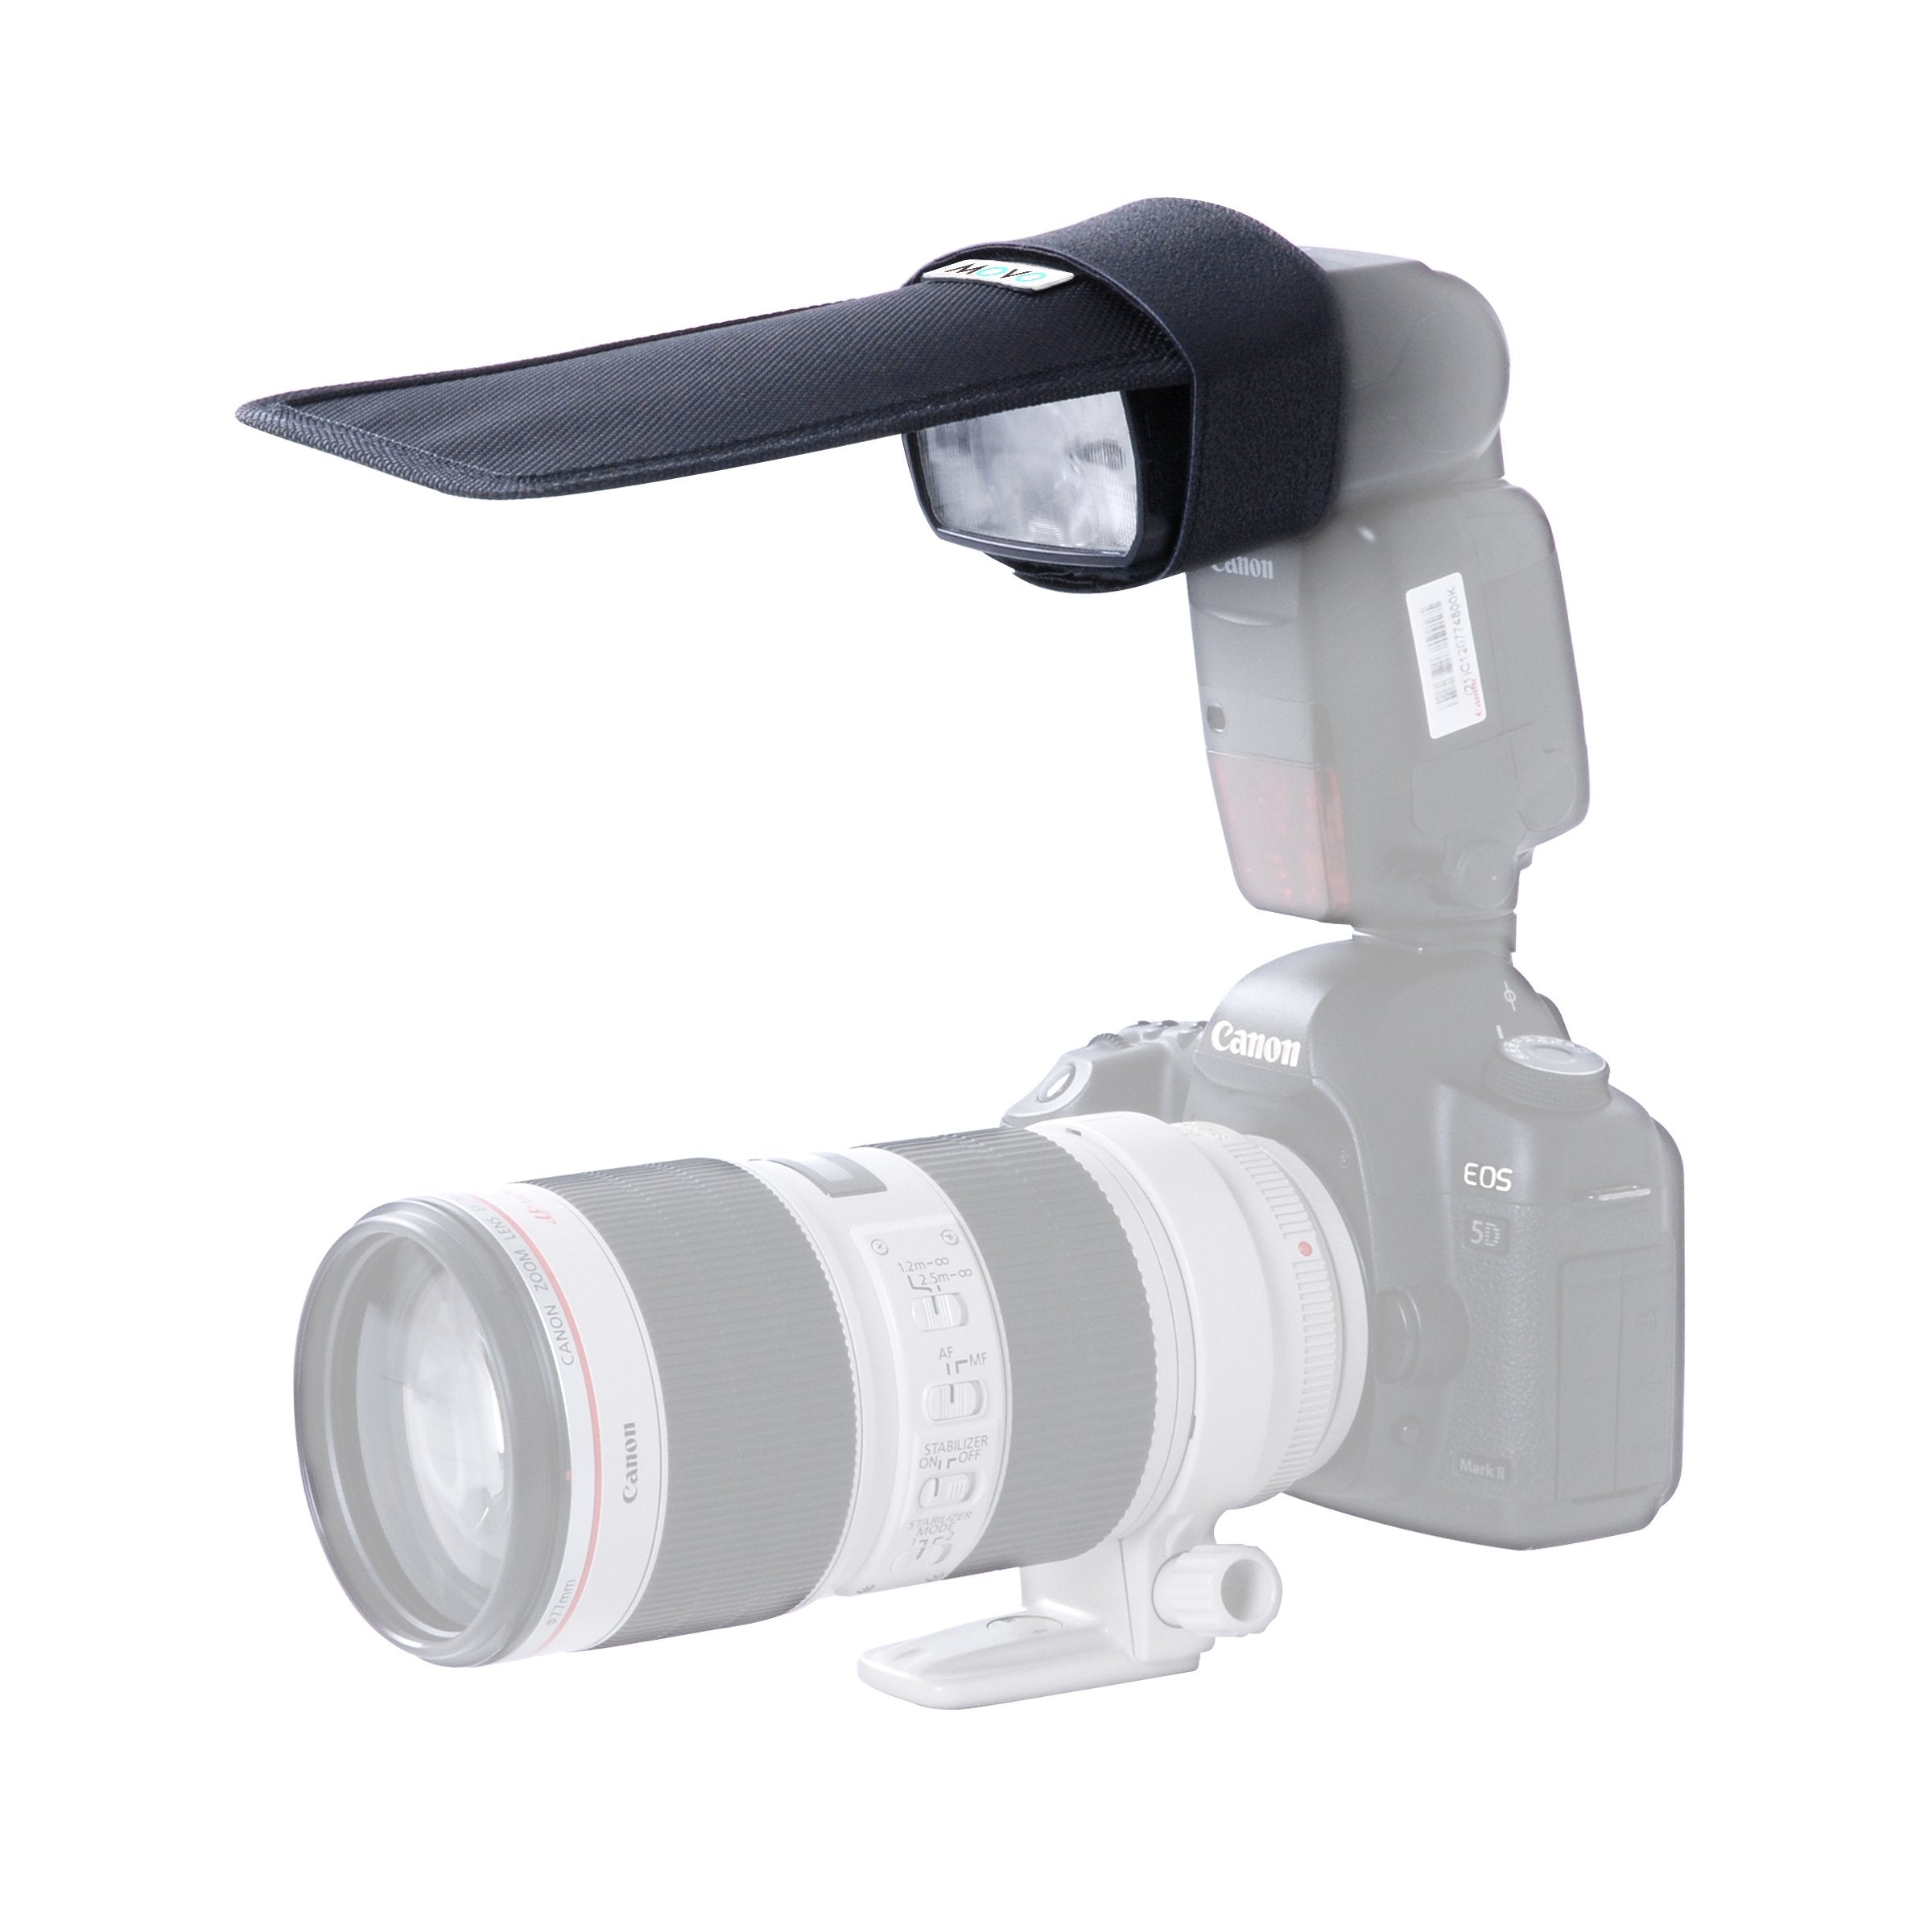 Movo Photo SB10 Universal Bounce Card, Light Shaper fits External Camera Flashes (7.5" X 4")  - Like New